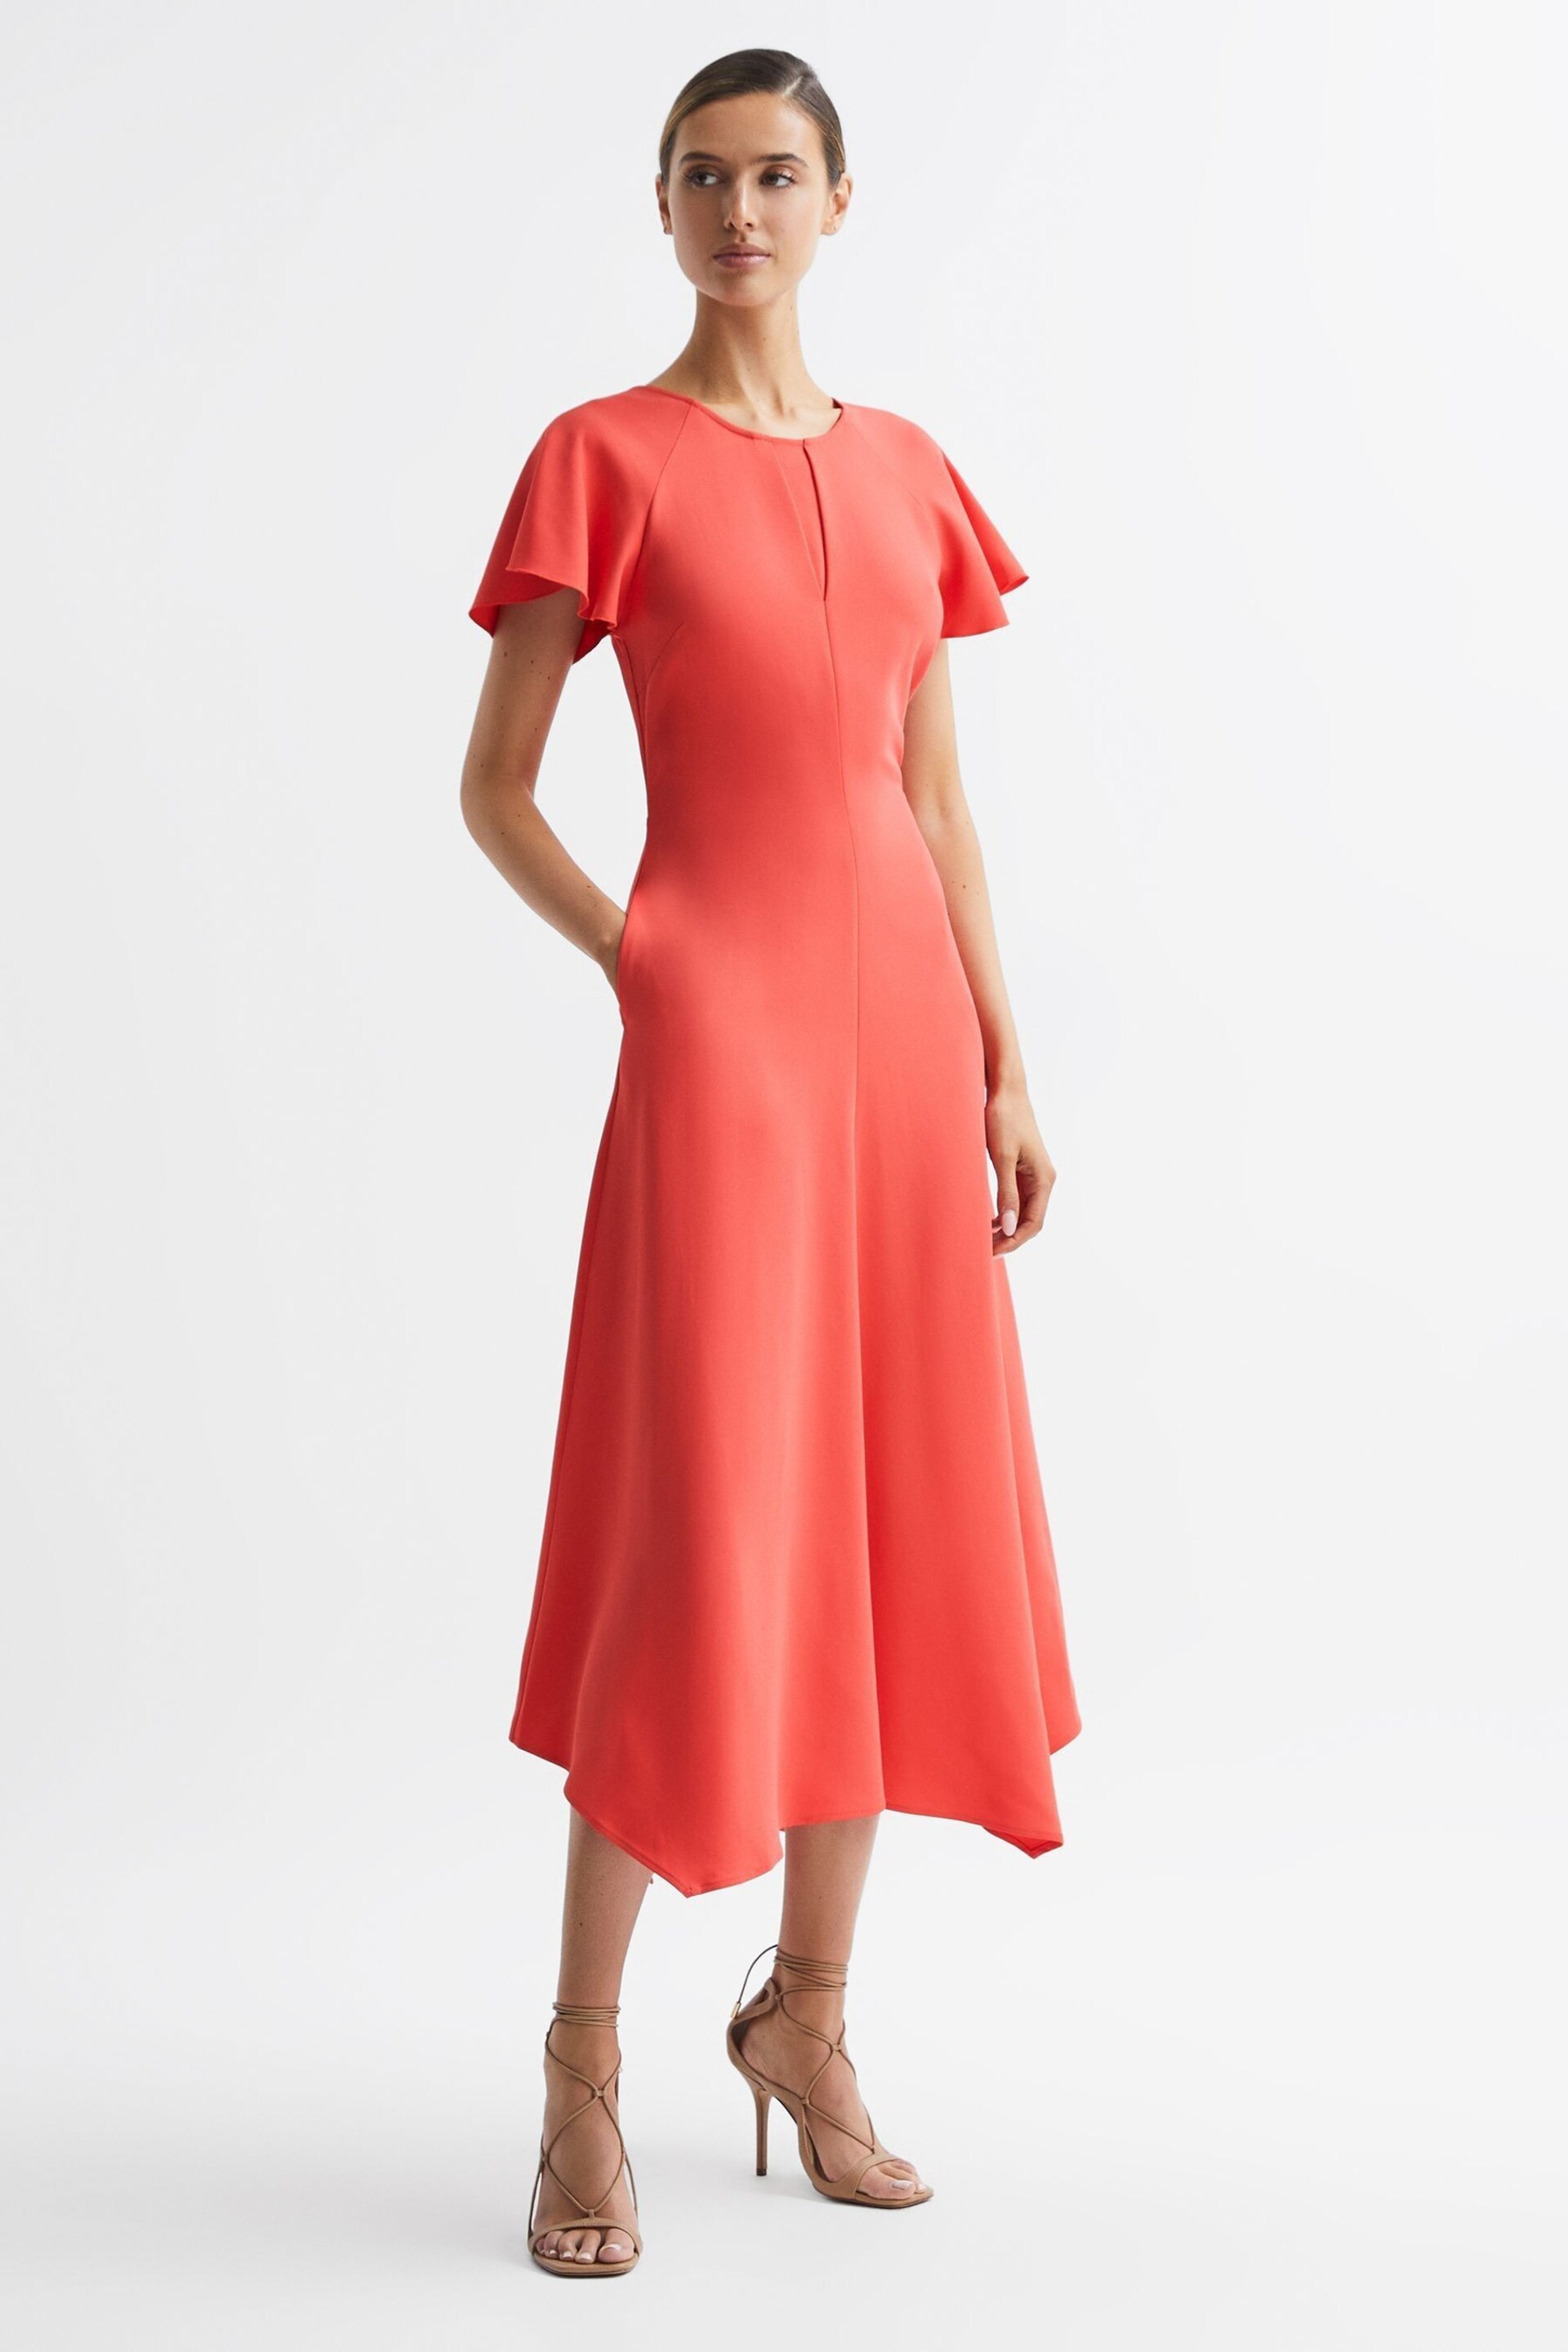 Reiss Coral Eleni Cap Sleeve Maxi Dress - Image 2 of 6